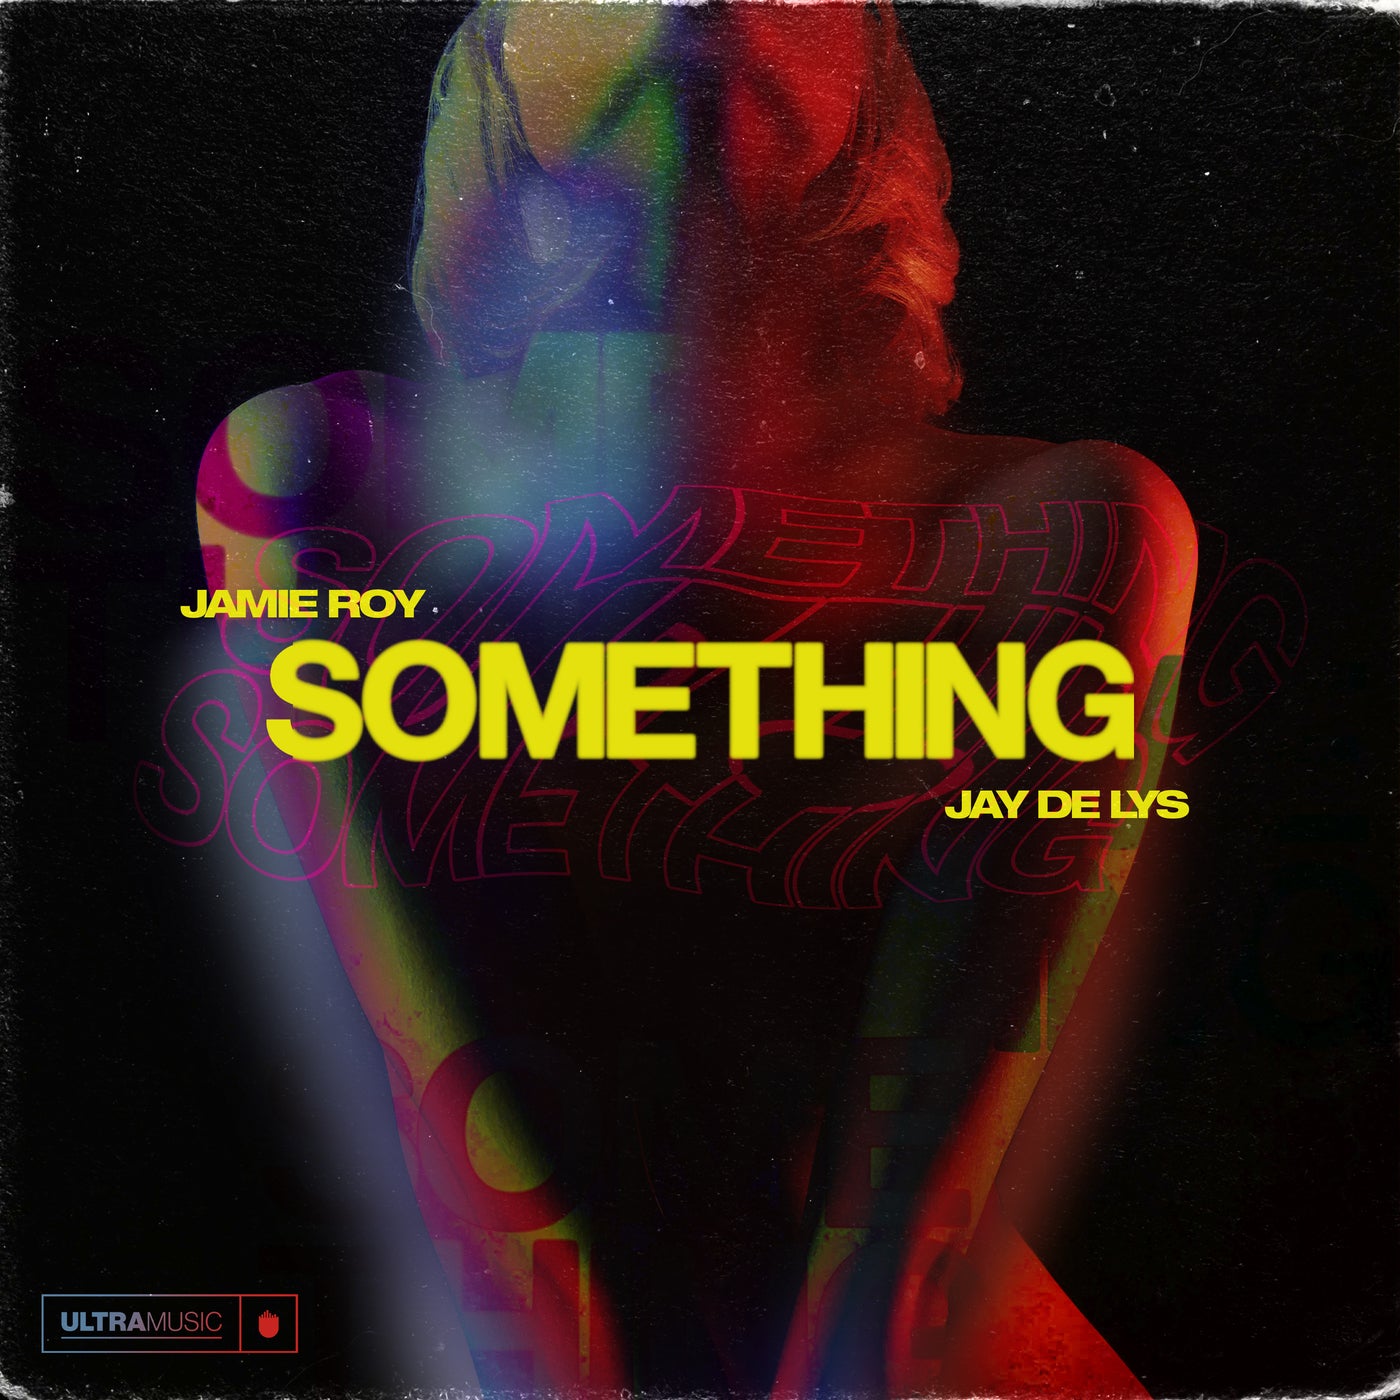 Jamie Roy, Jay de Lys – Something – Extended Mix [UL02666]